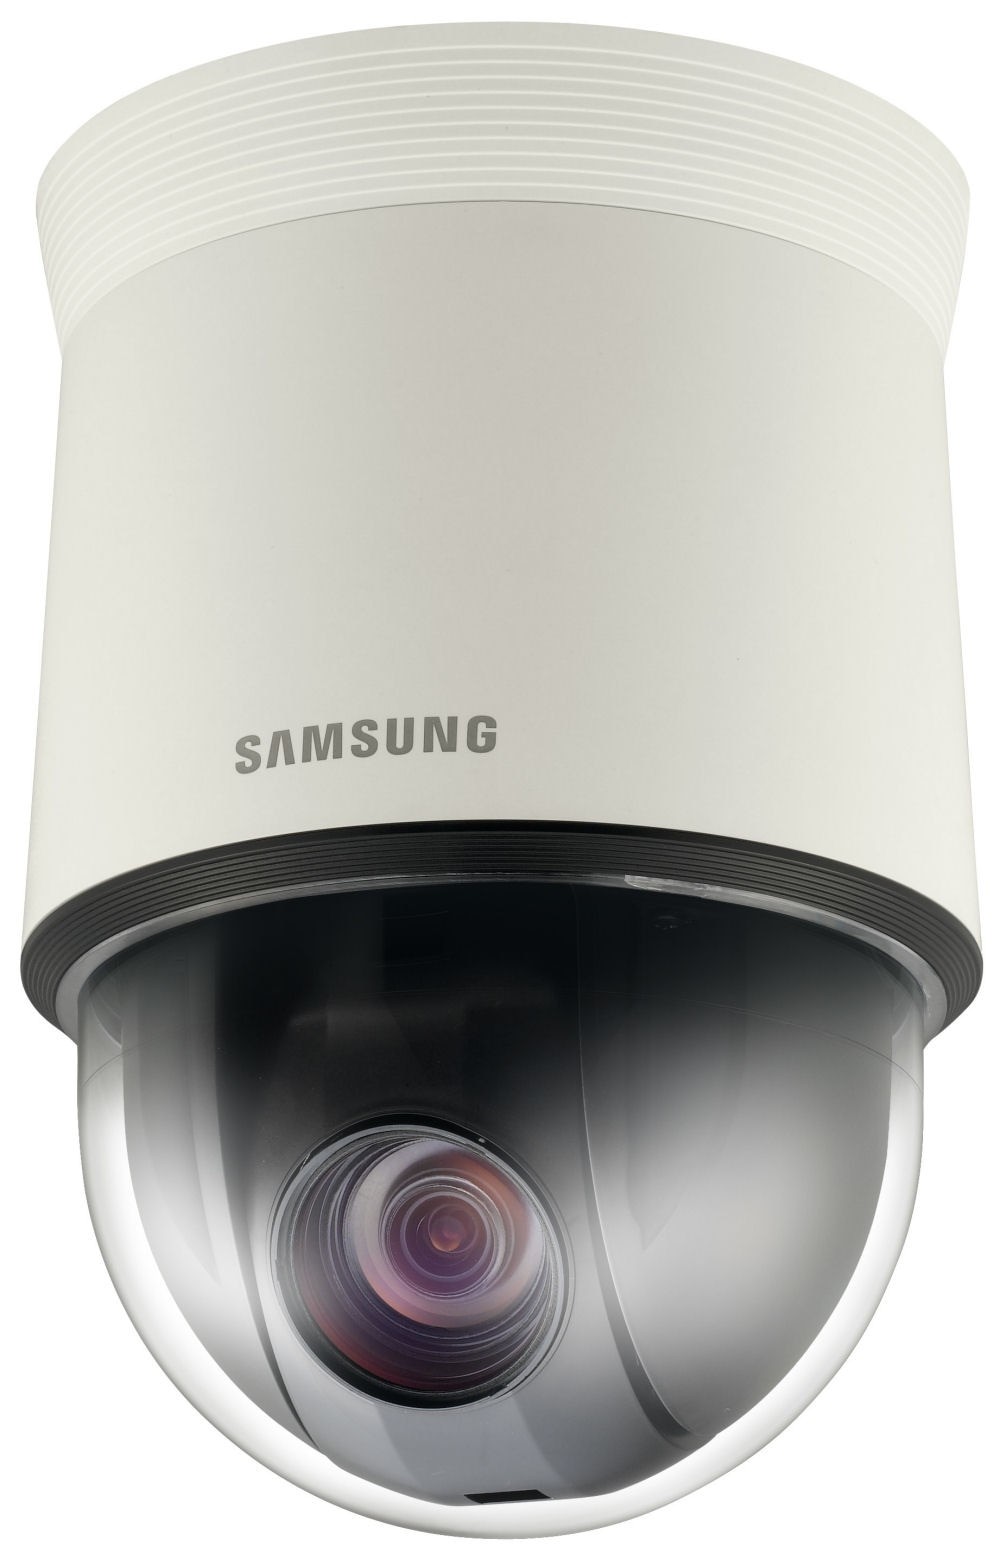 Samsung SCP2371 37x High Resolution WDR PTZ Dome Camera